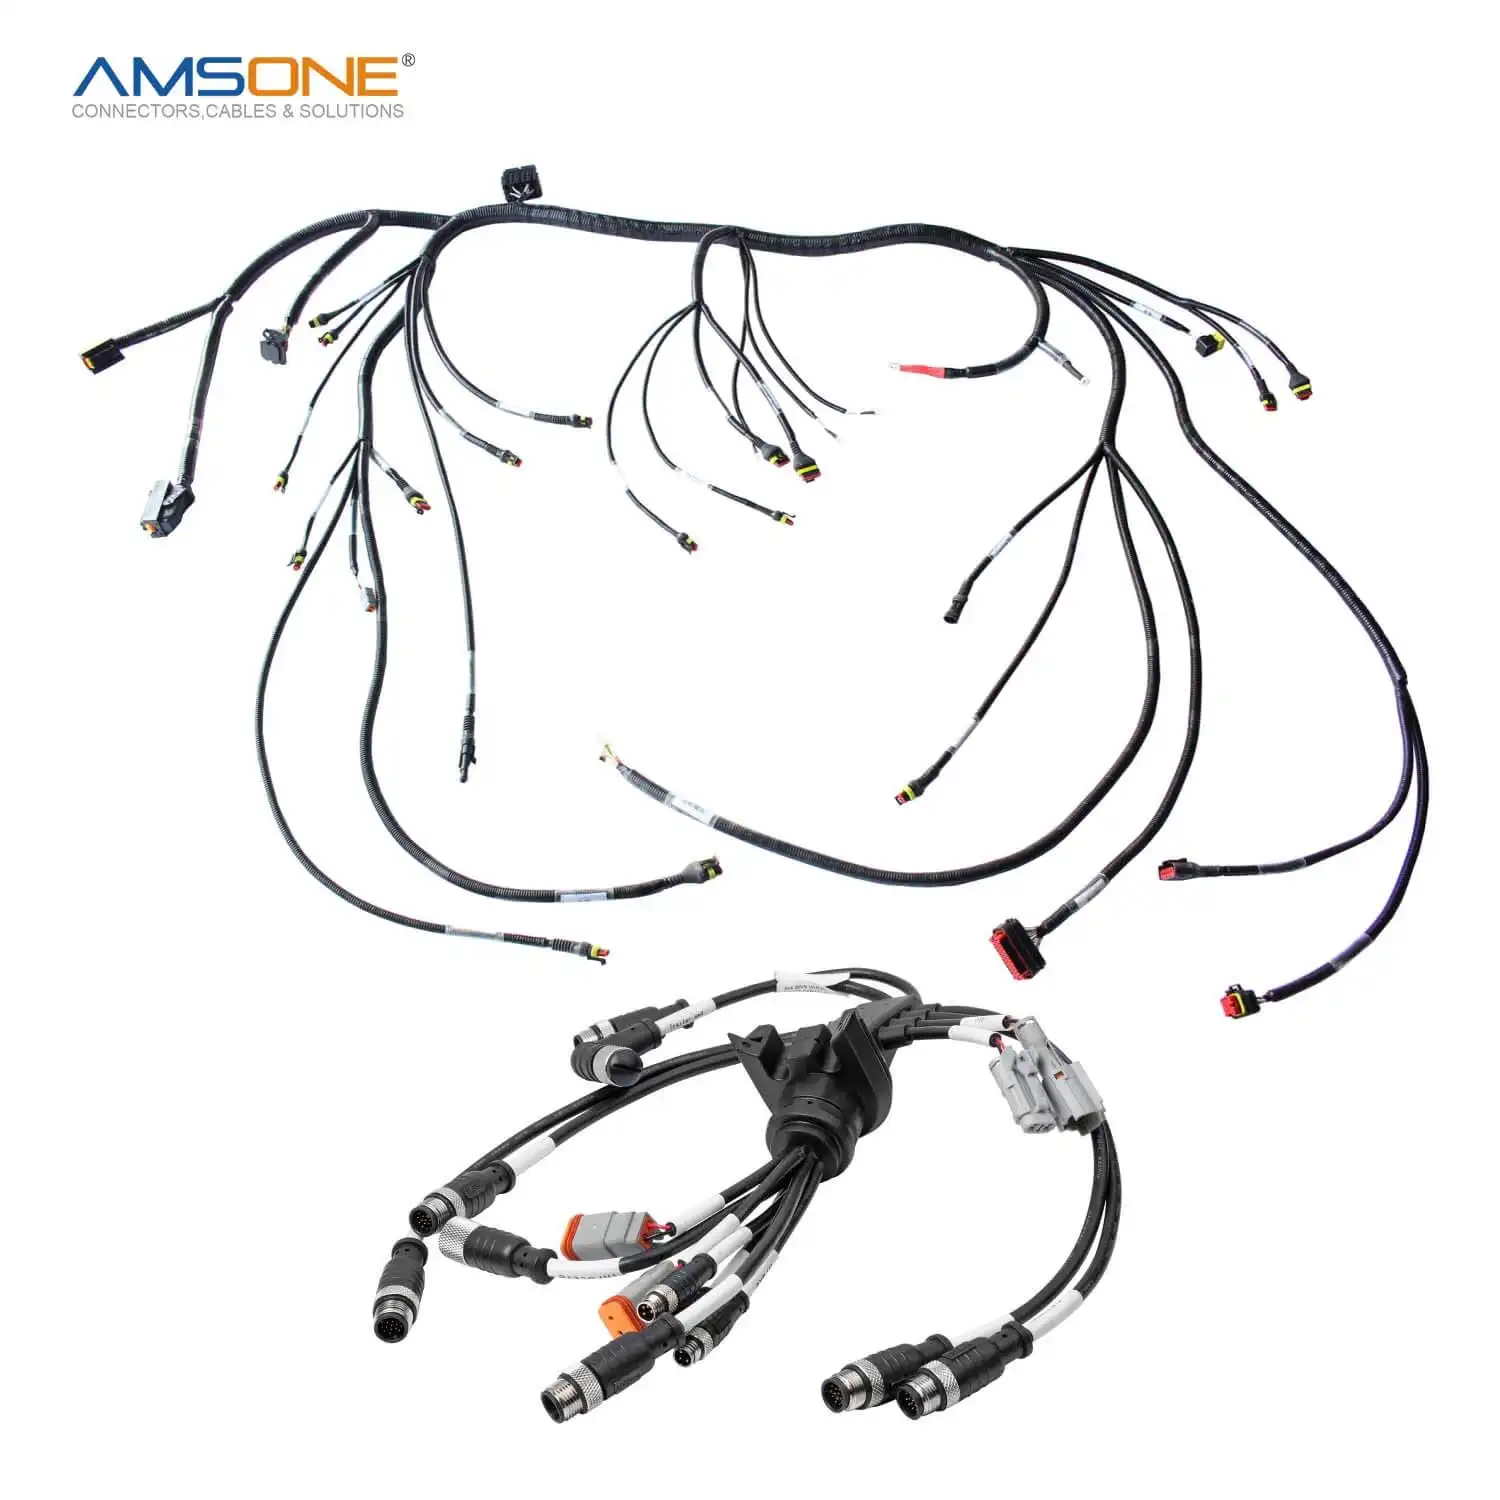 Amsone Custom Trailer Atv Car Caterpillar Arnés de cableado Conector Fabricante 2Jz Para motocicleta Control remoto estroboscópico